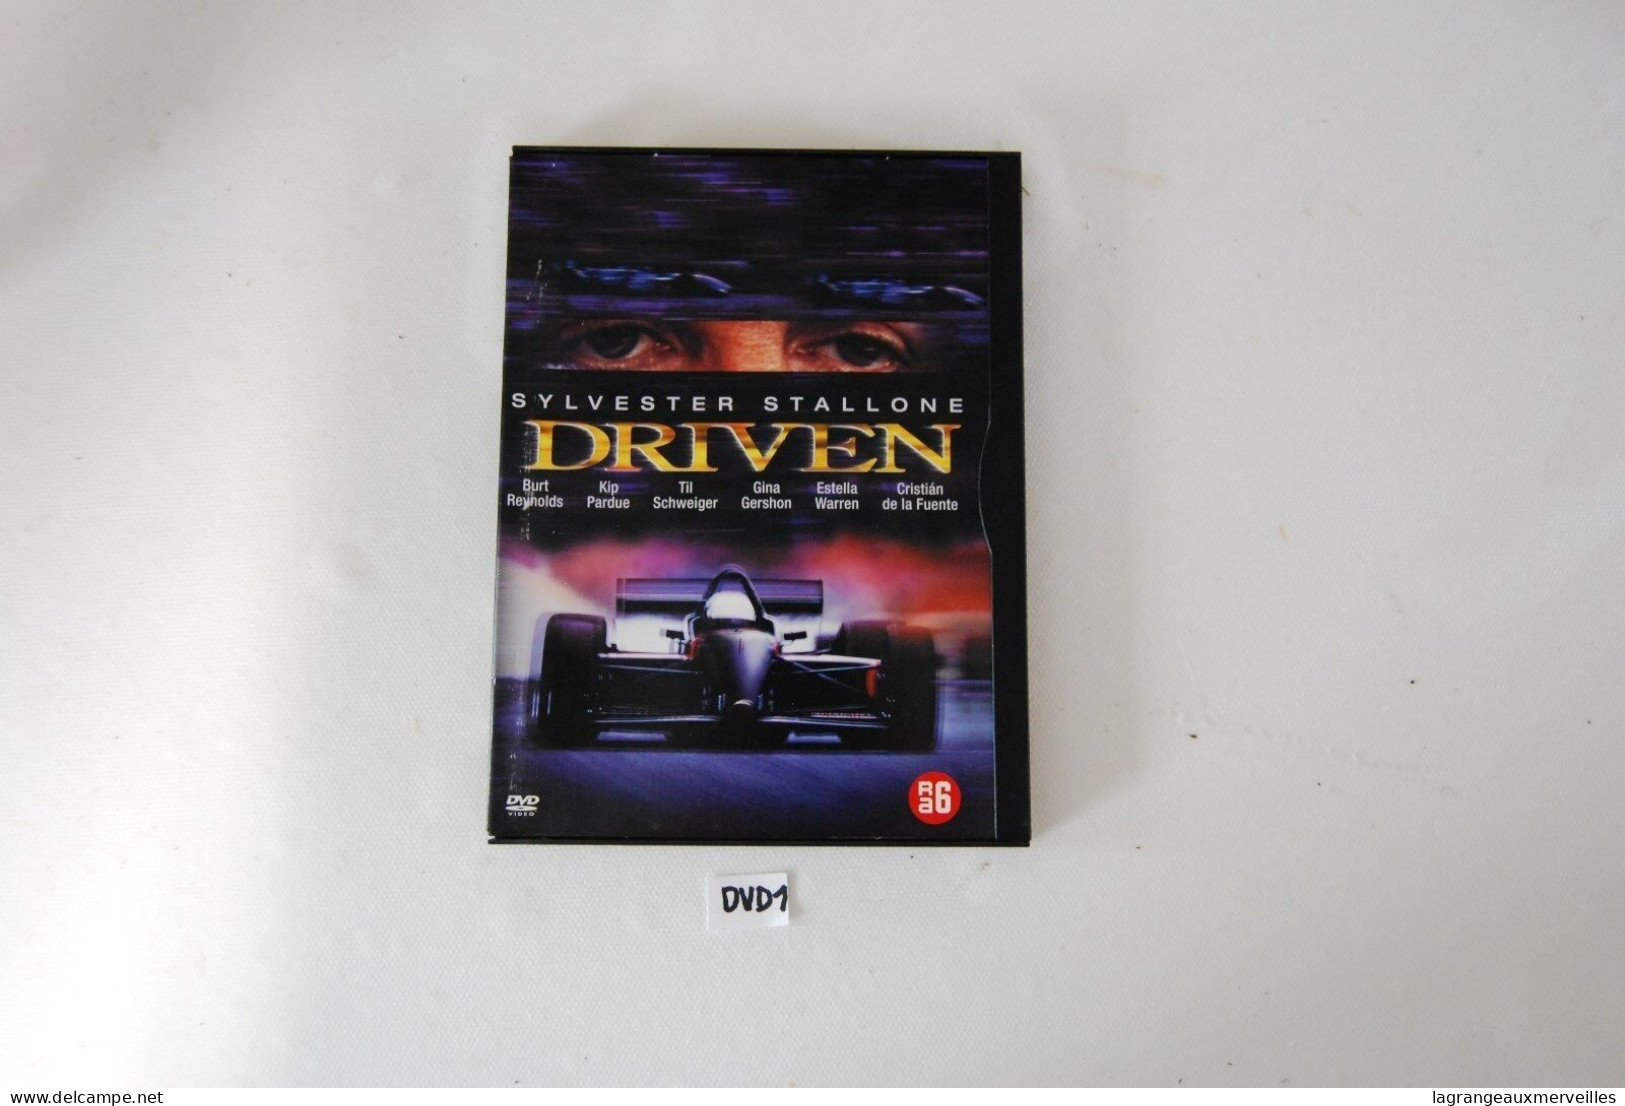 DVD1 DRIVEN - SYLVESTER STALLONE - Action, Adventure